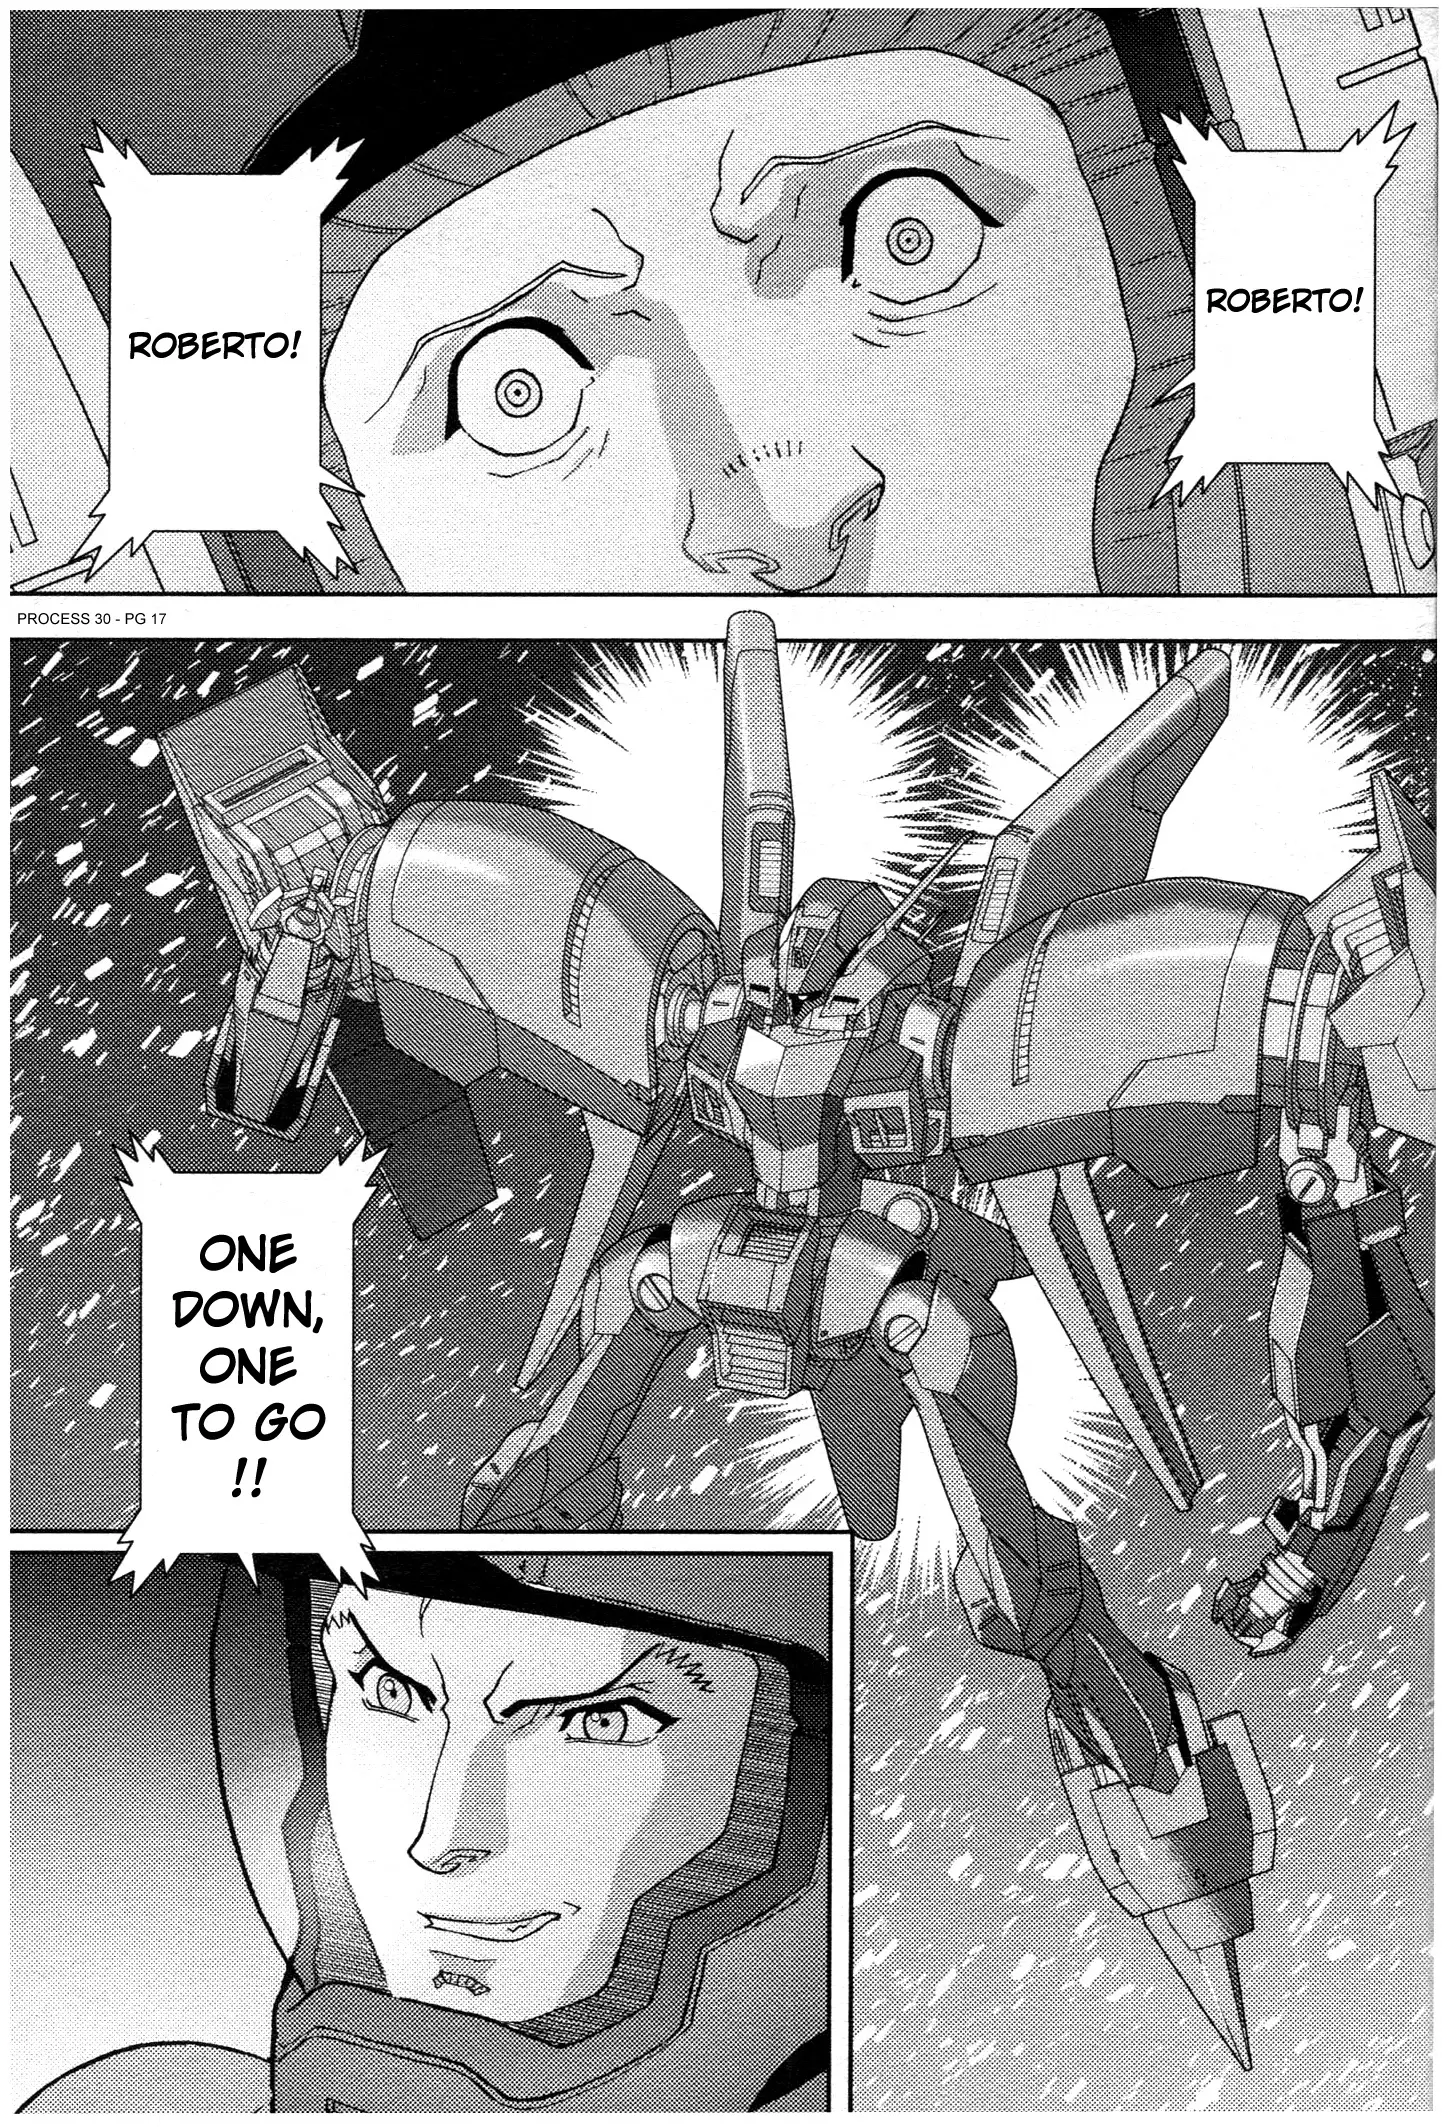 Mobile Suit Zeta Gundam - Define - 79 page 17-739c7514